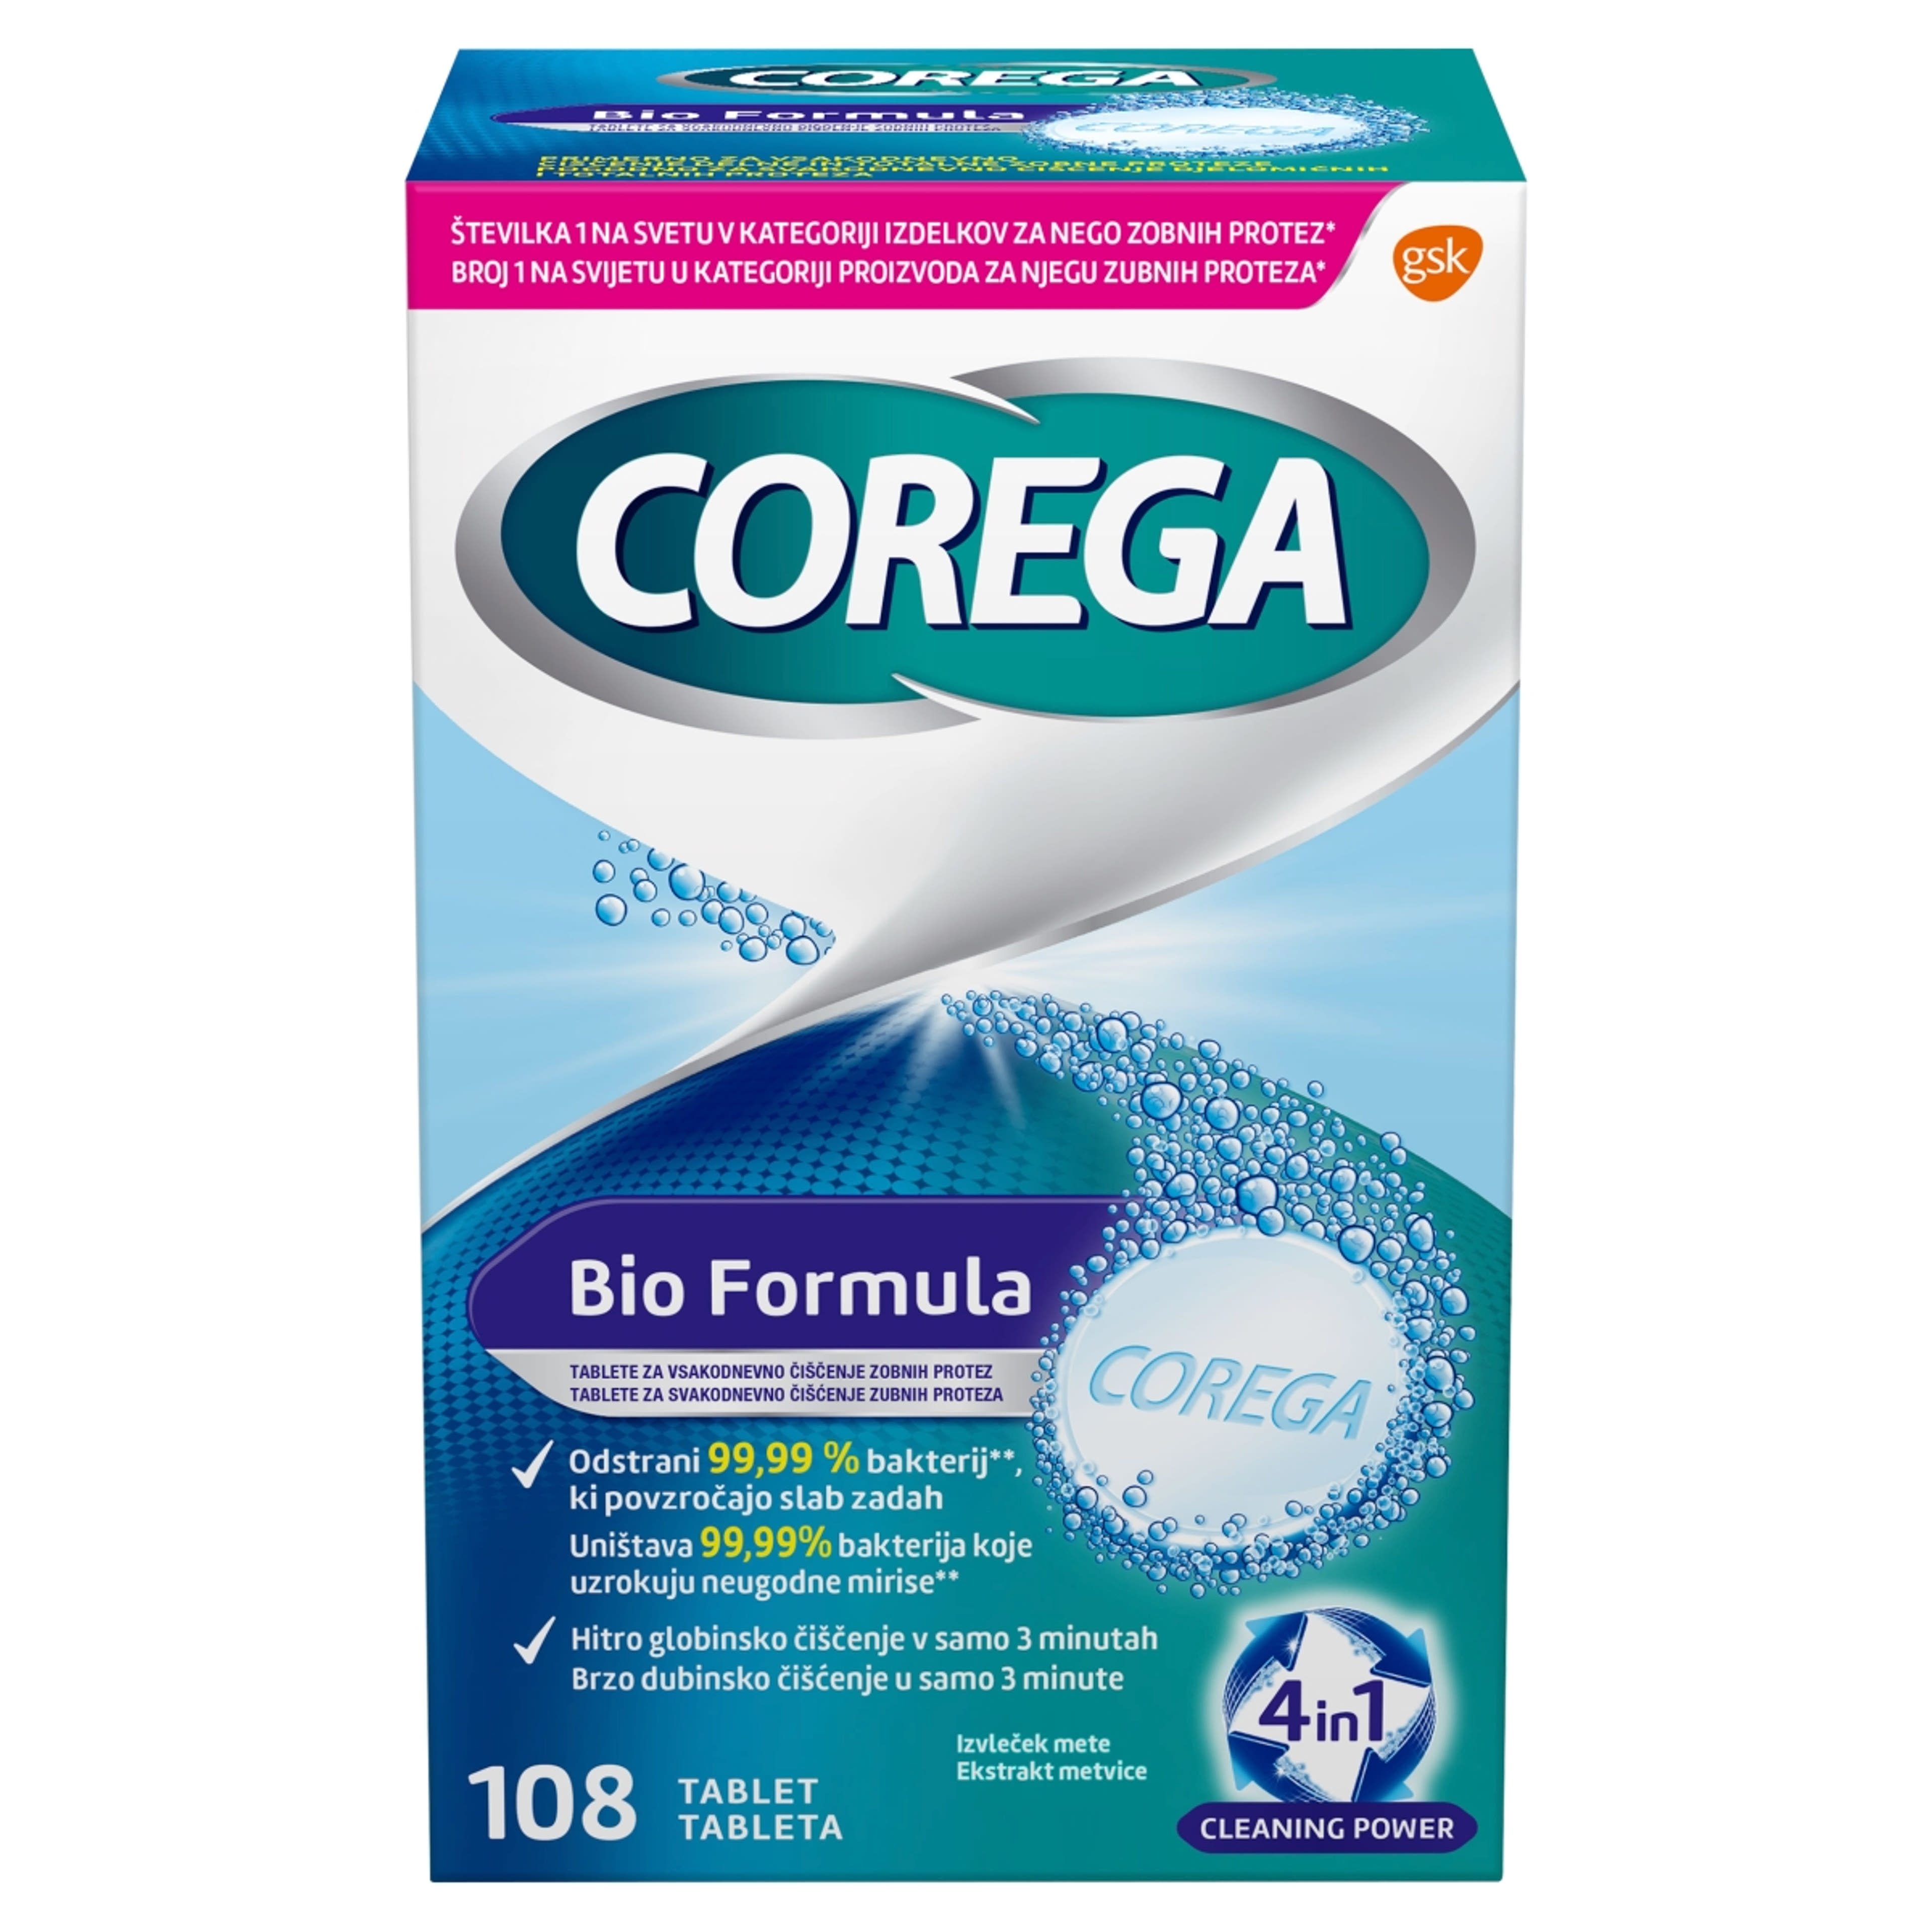 Corega Bio Formula műfogsortisztító tabletta - 108 db-1